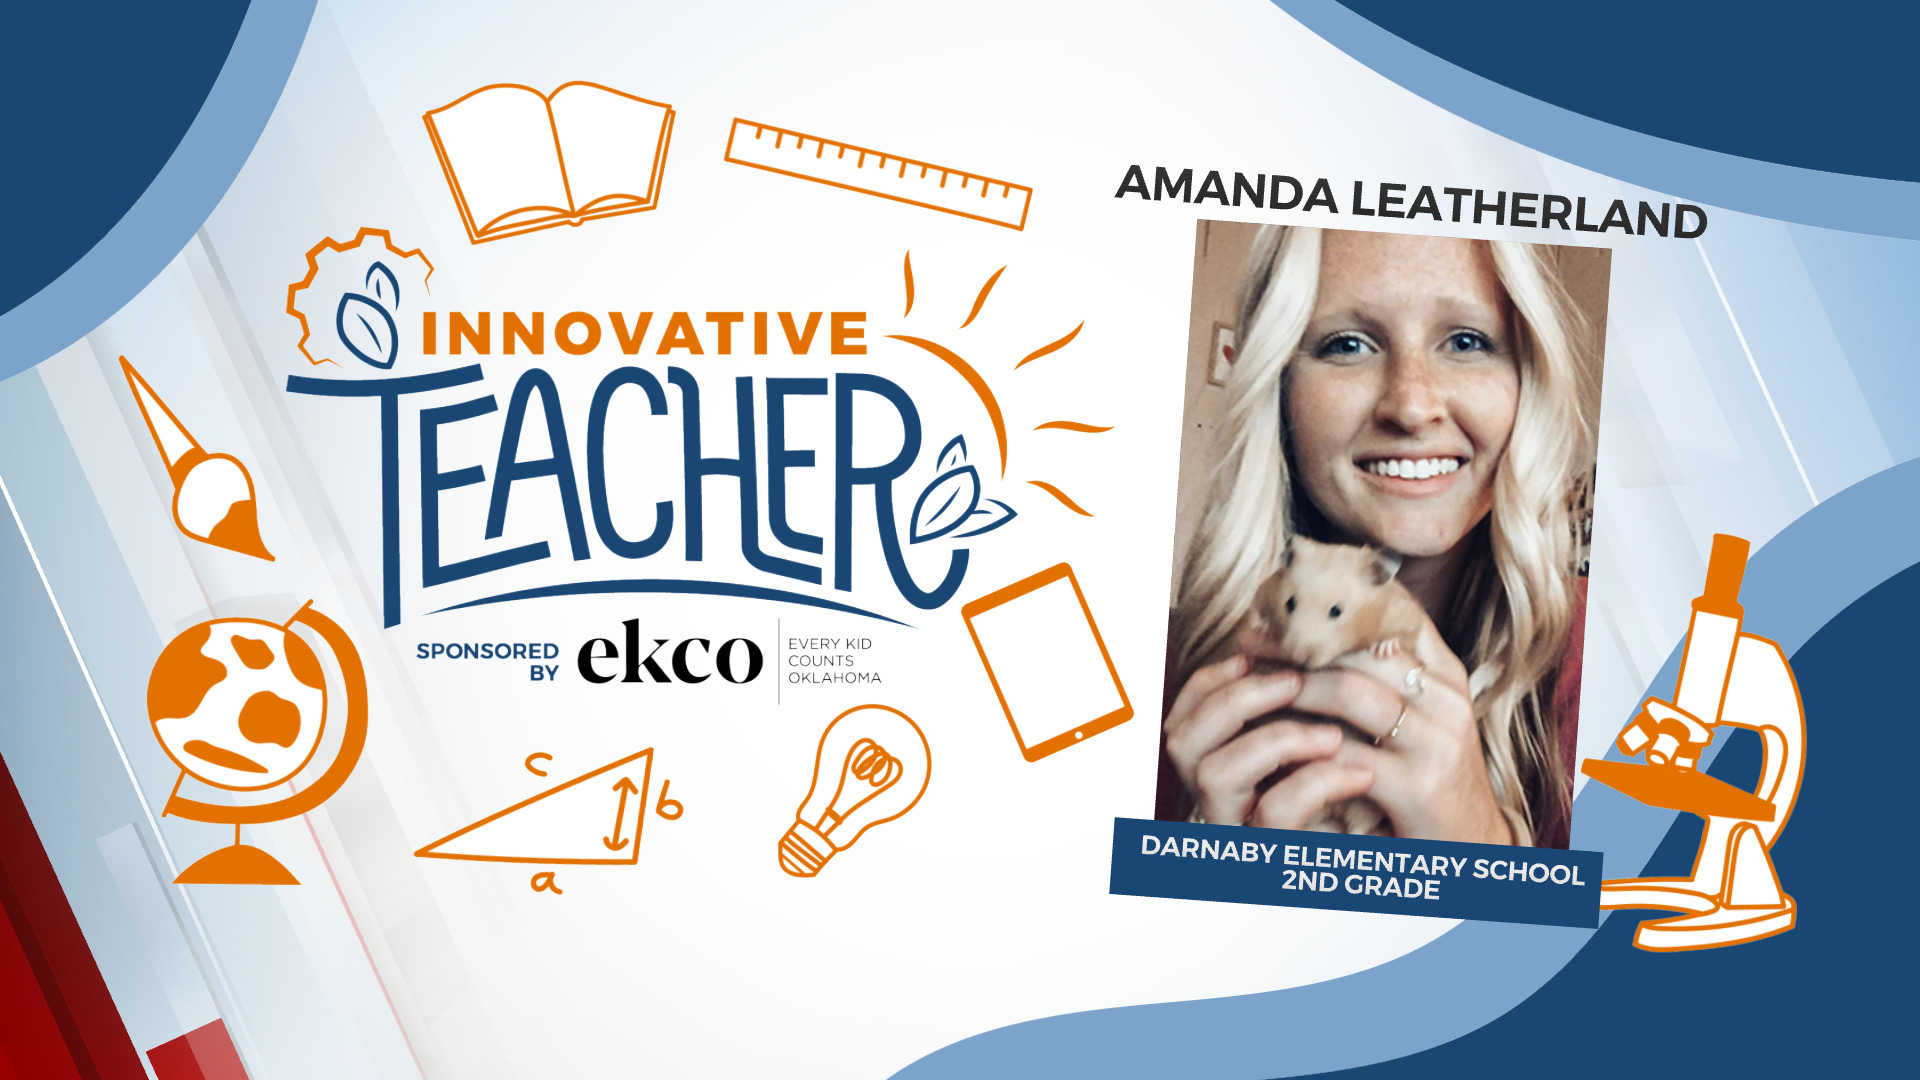 Innovative Teacher: Amanda Leatherland of Darnaby Elementary School